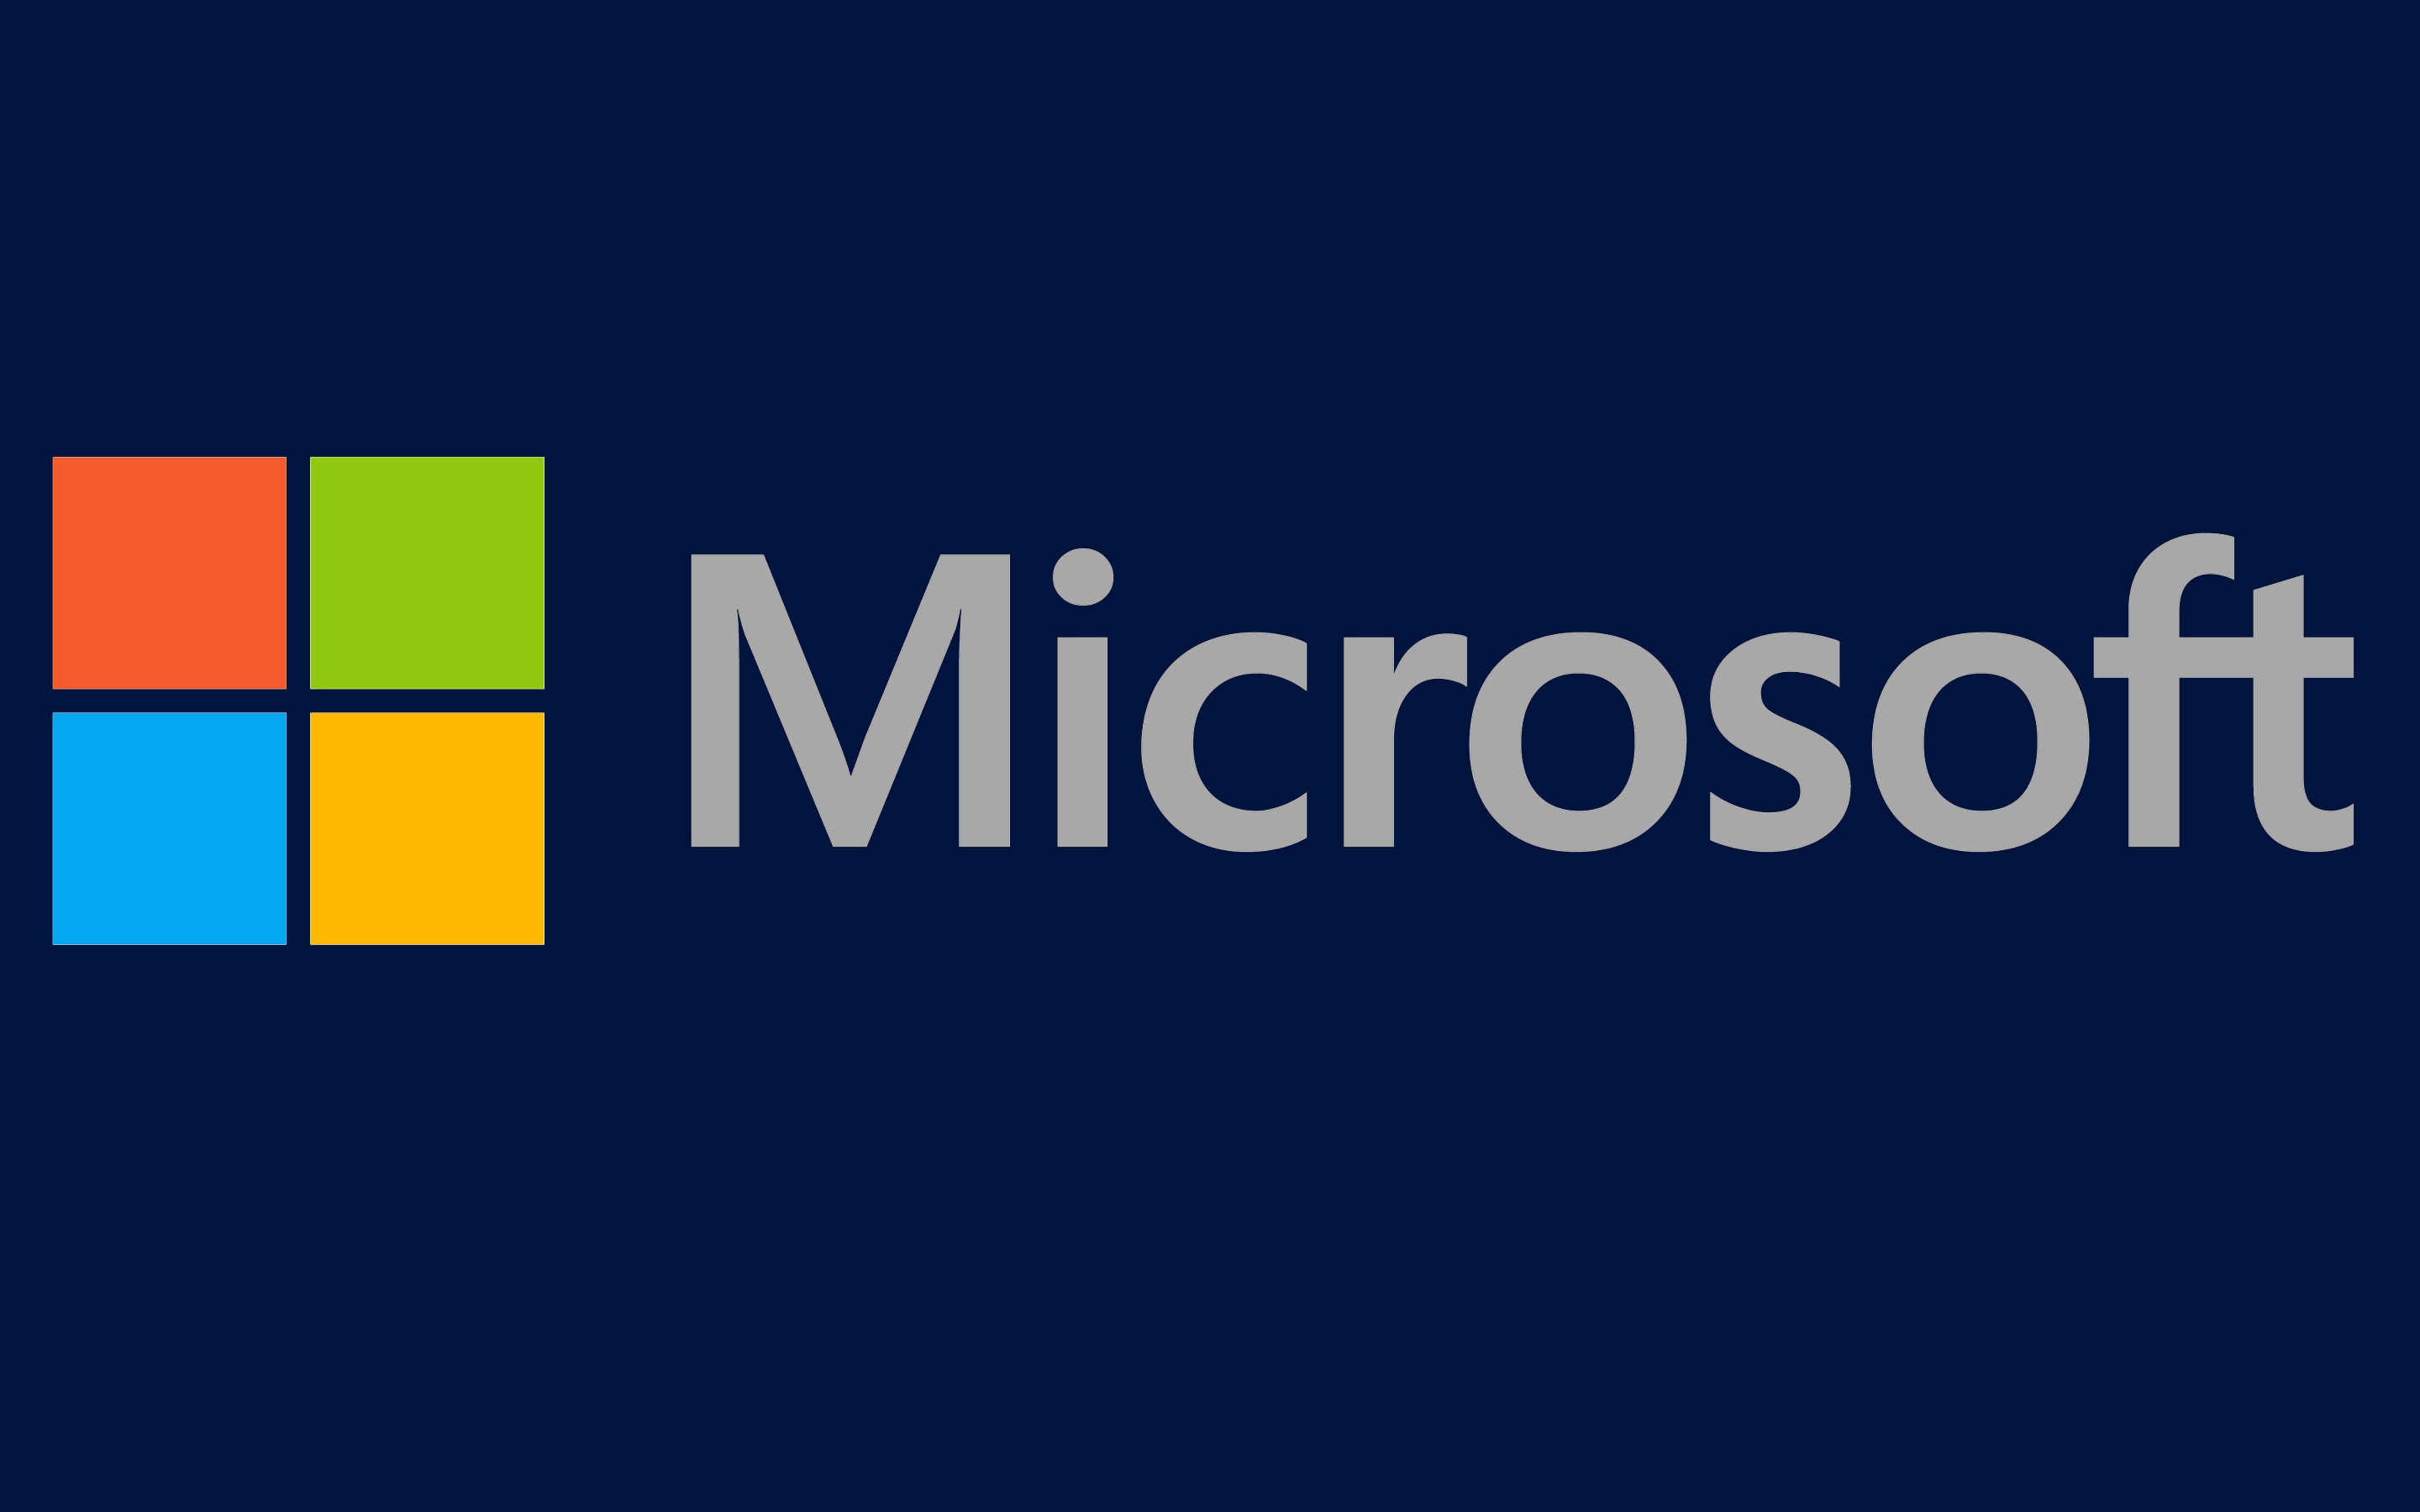  logotipo de MIcrosoft que fue presentado en agosto pasado Microsoft 2880x1800